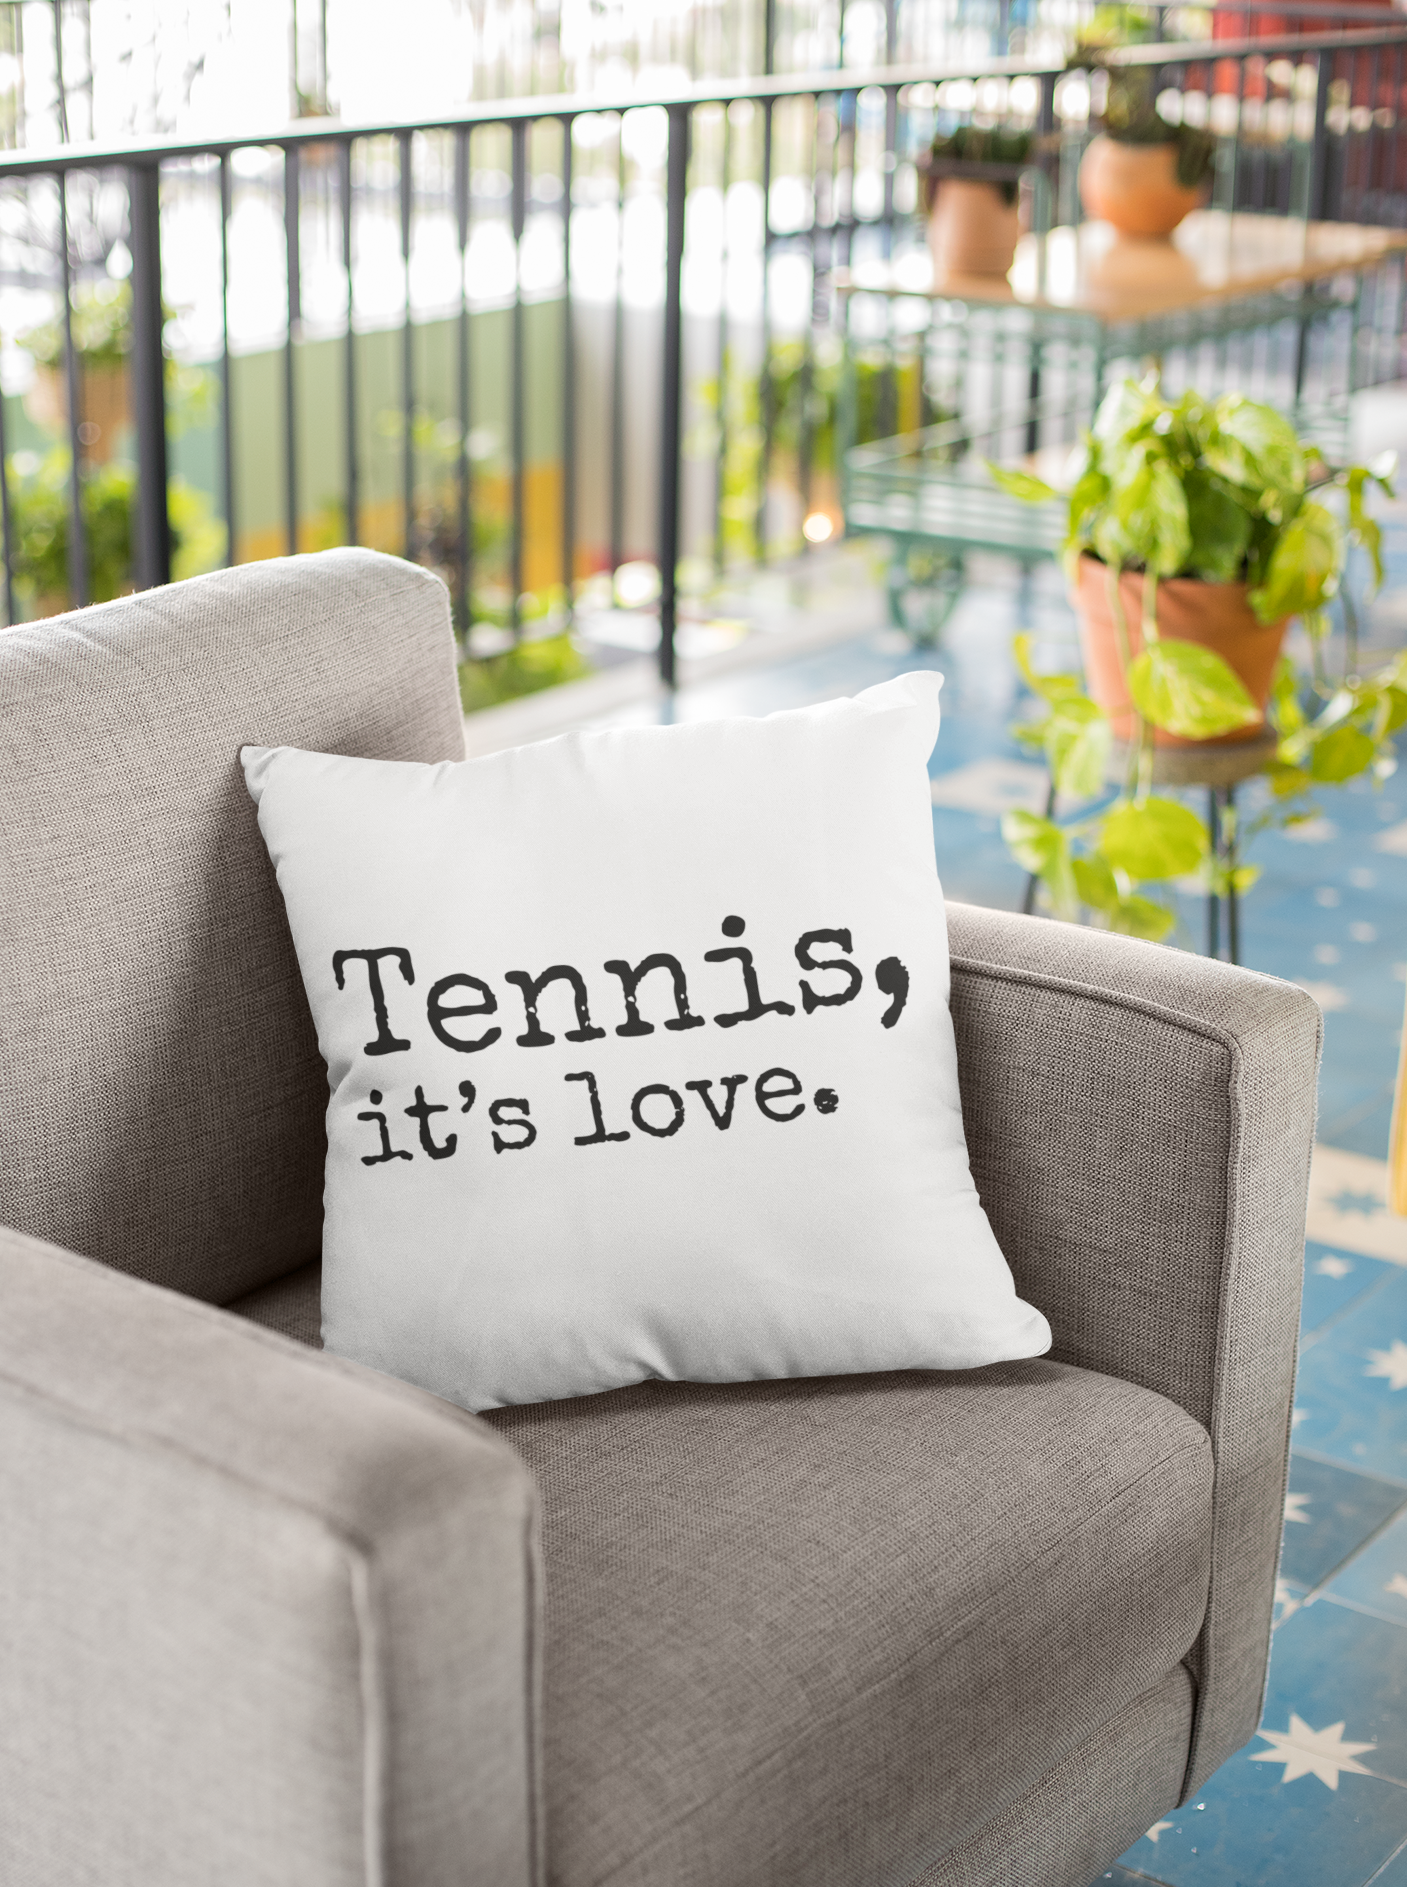 Tennis, it's love. White Spun Polyester Square Pillow